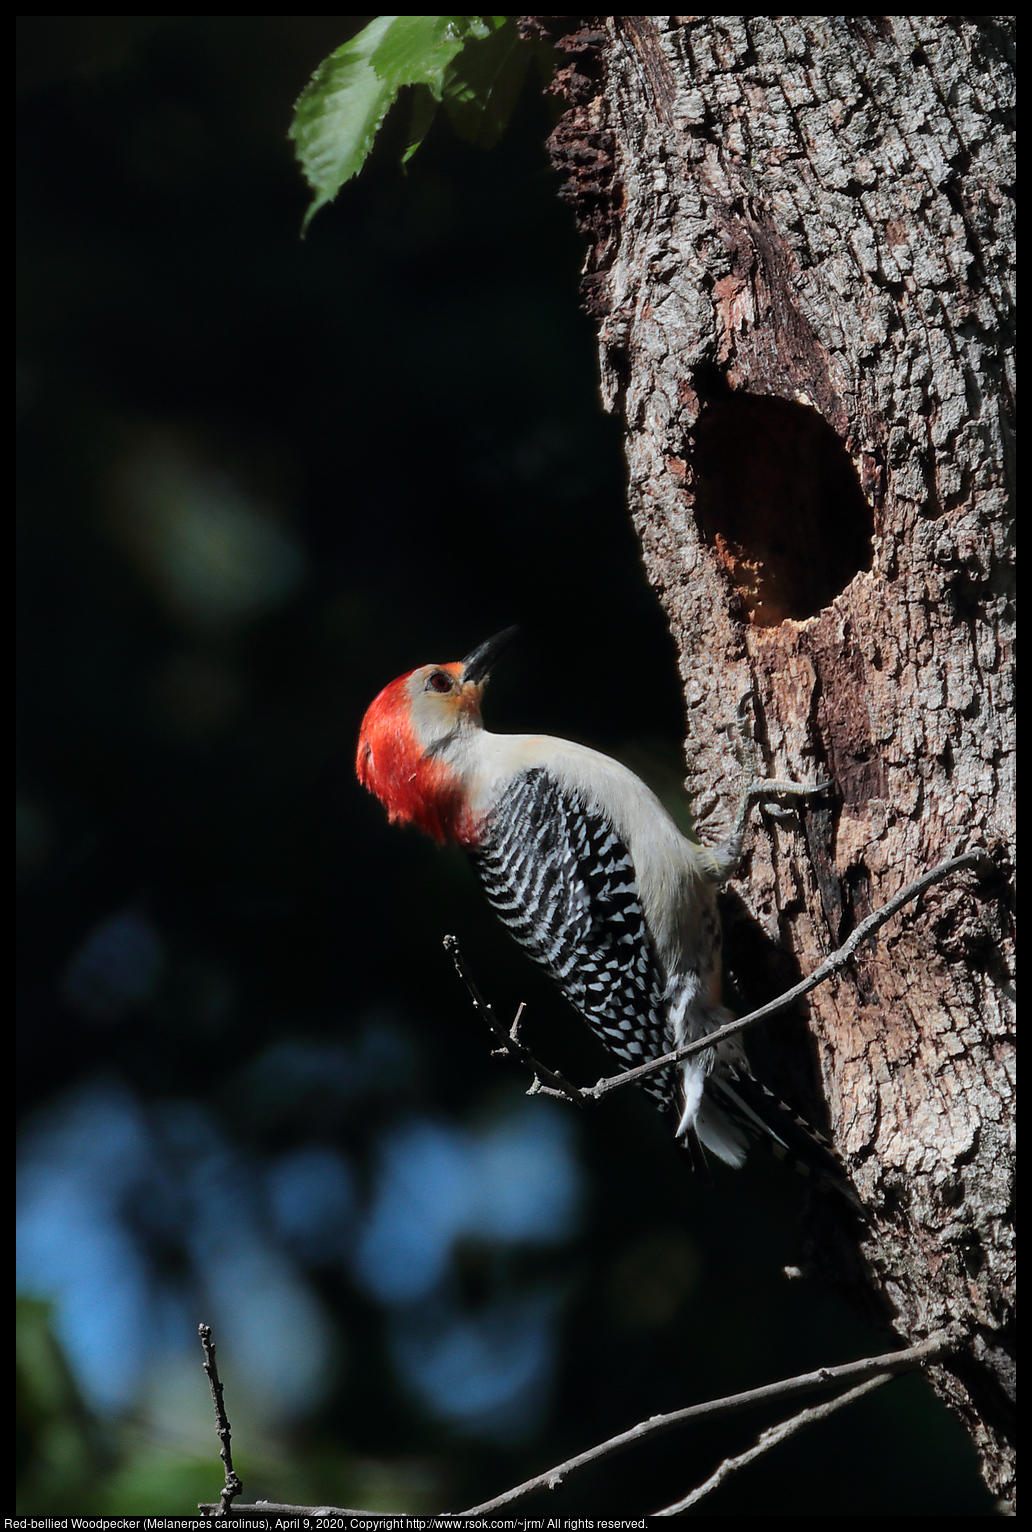 Red-bellied Woodpecker (Melanerpes carolinus), April 9, 2020